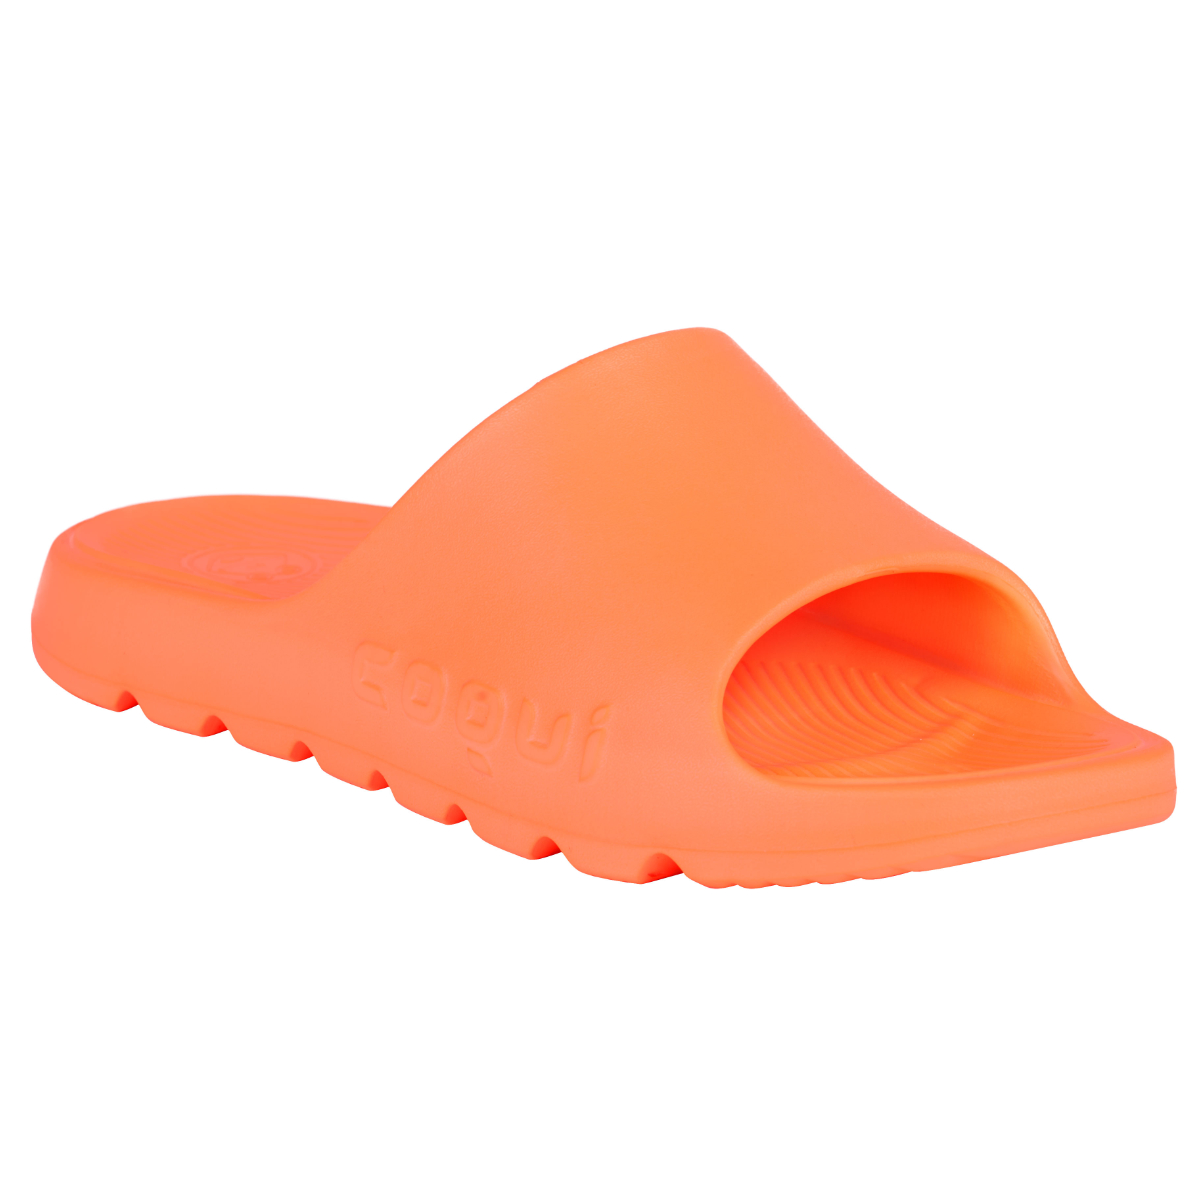 Pánské pantofle COQUI LOU neon oranžové Fusakle